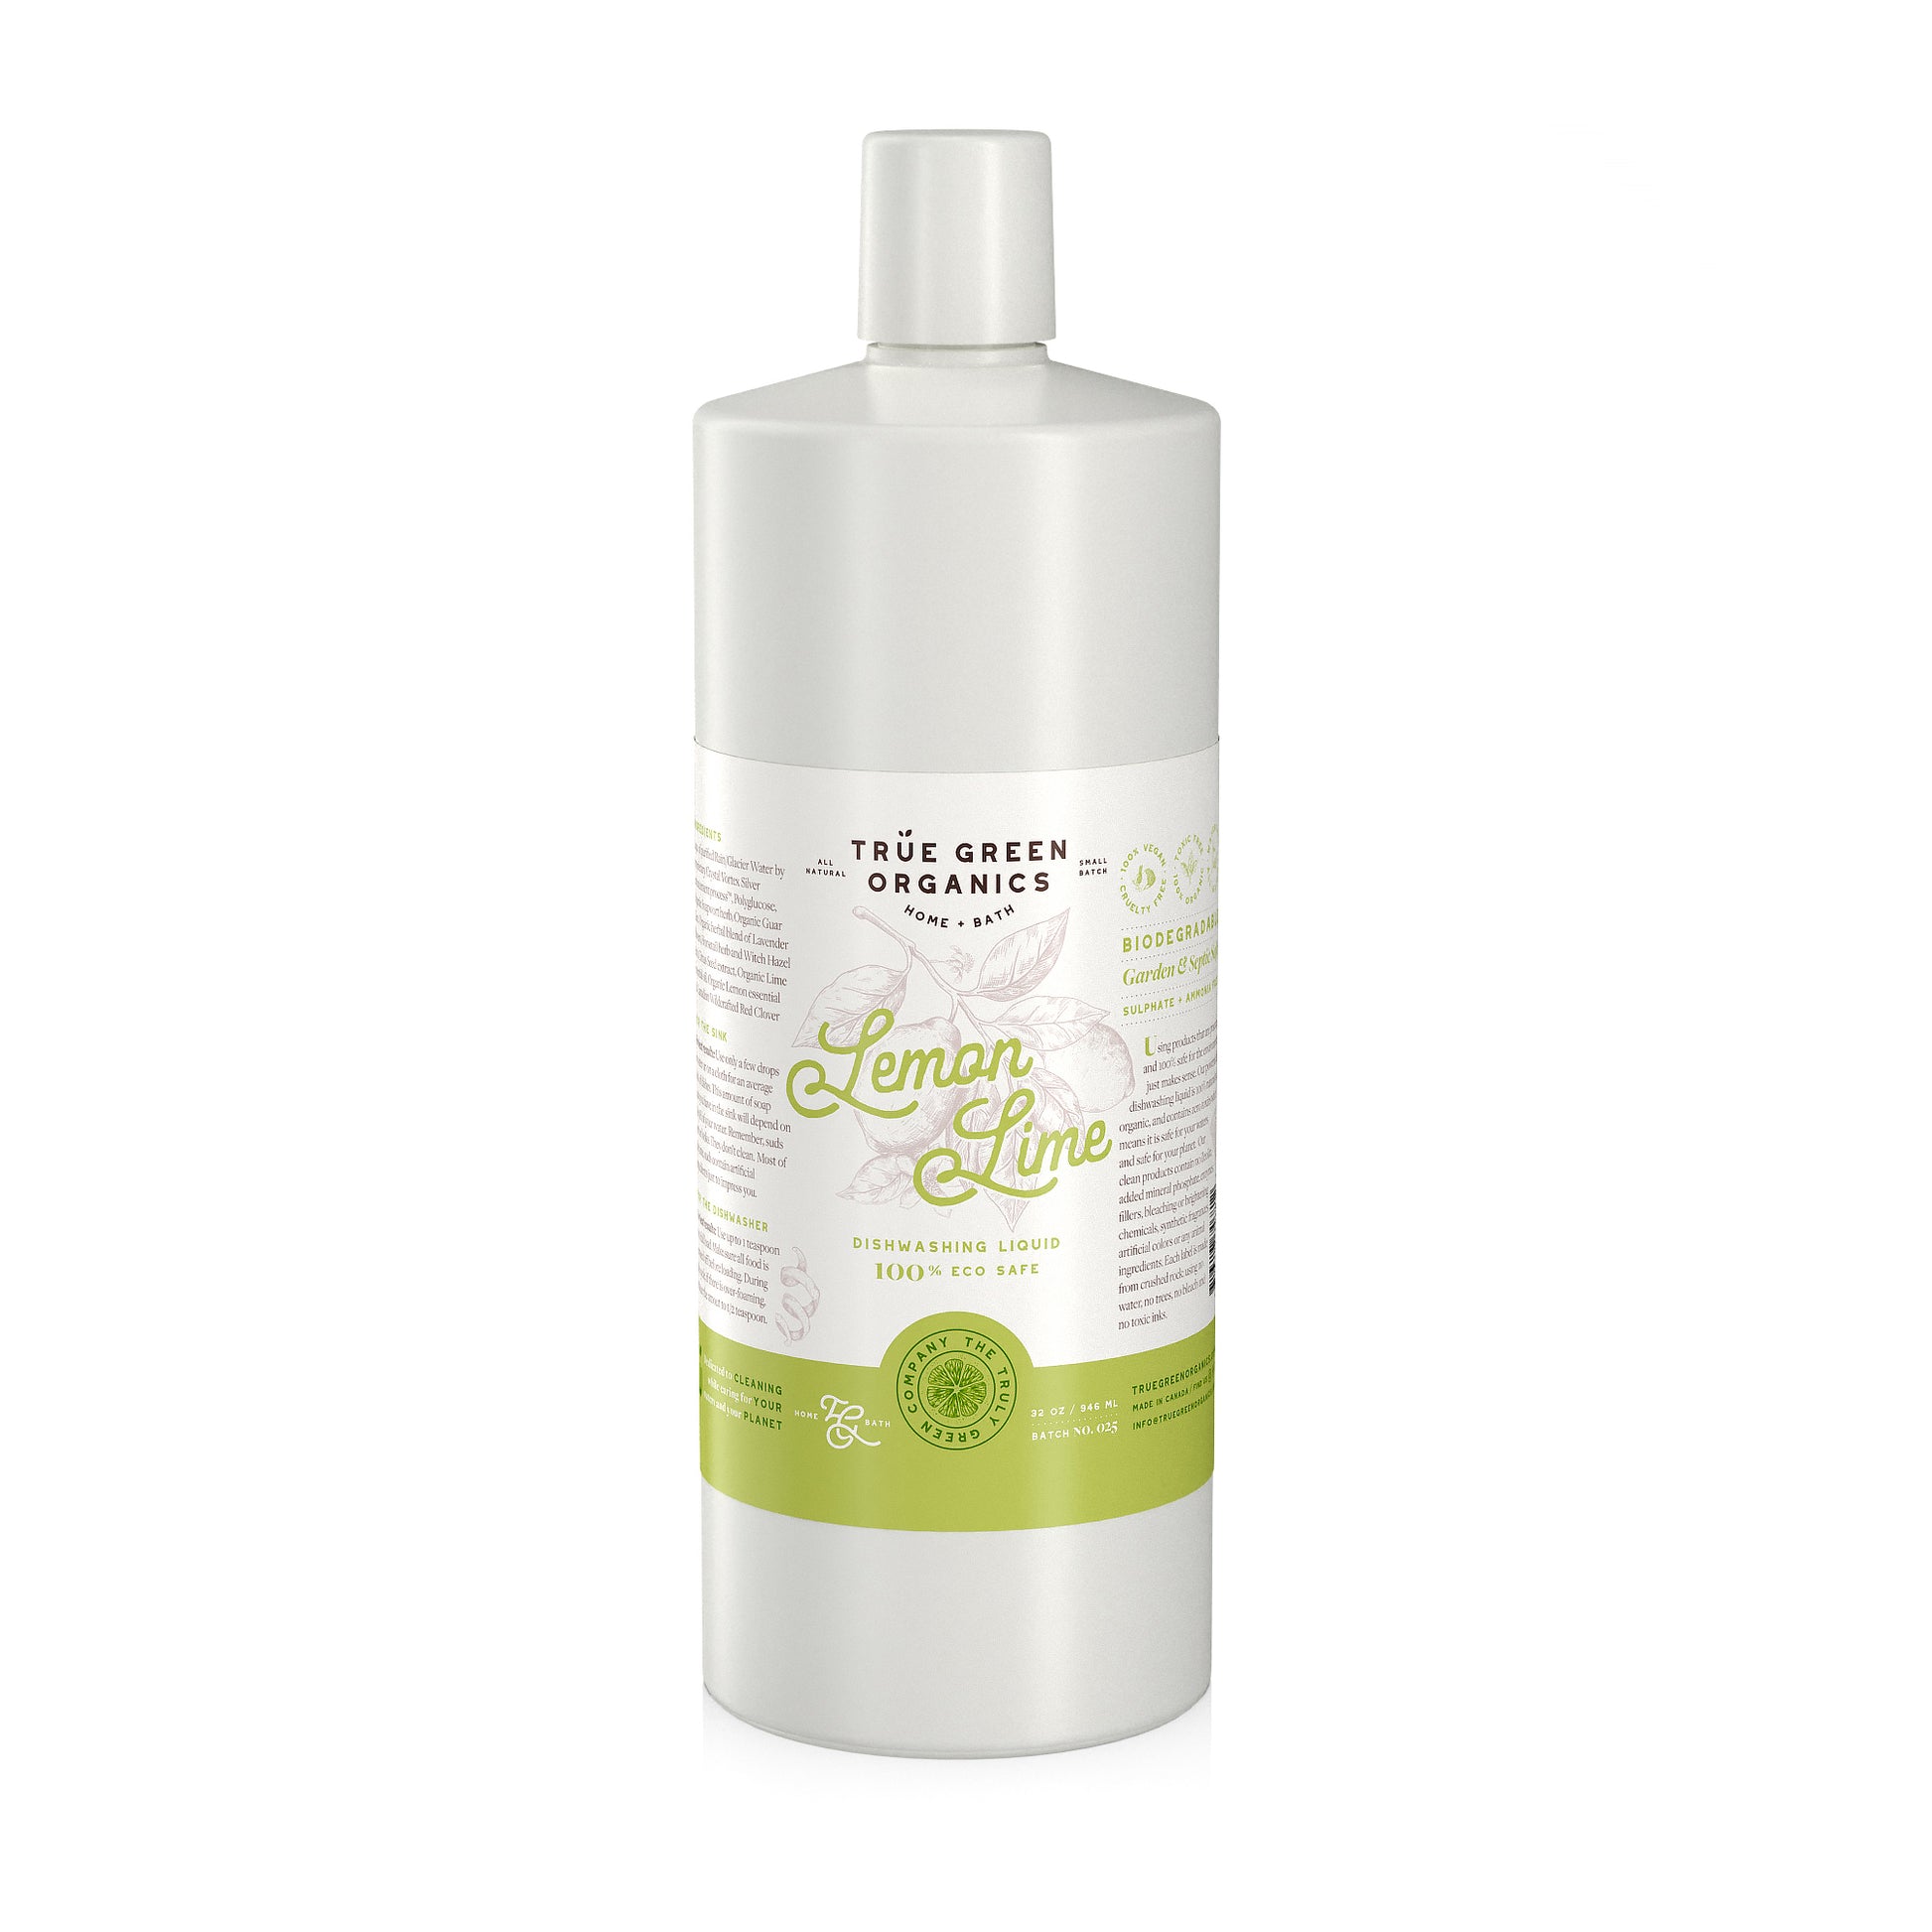 True Green Organics Sparkle Clean Dish Washing Soap Lemon Lime 32oz bottle